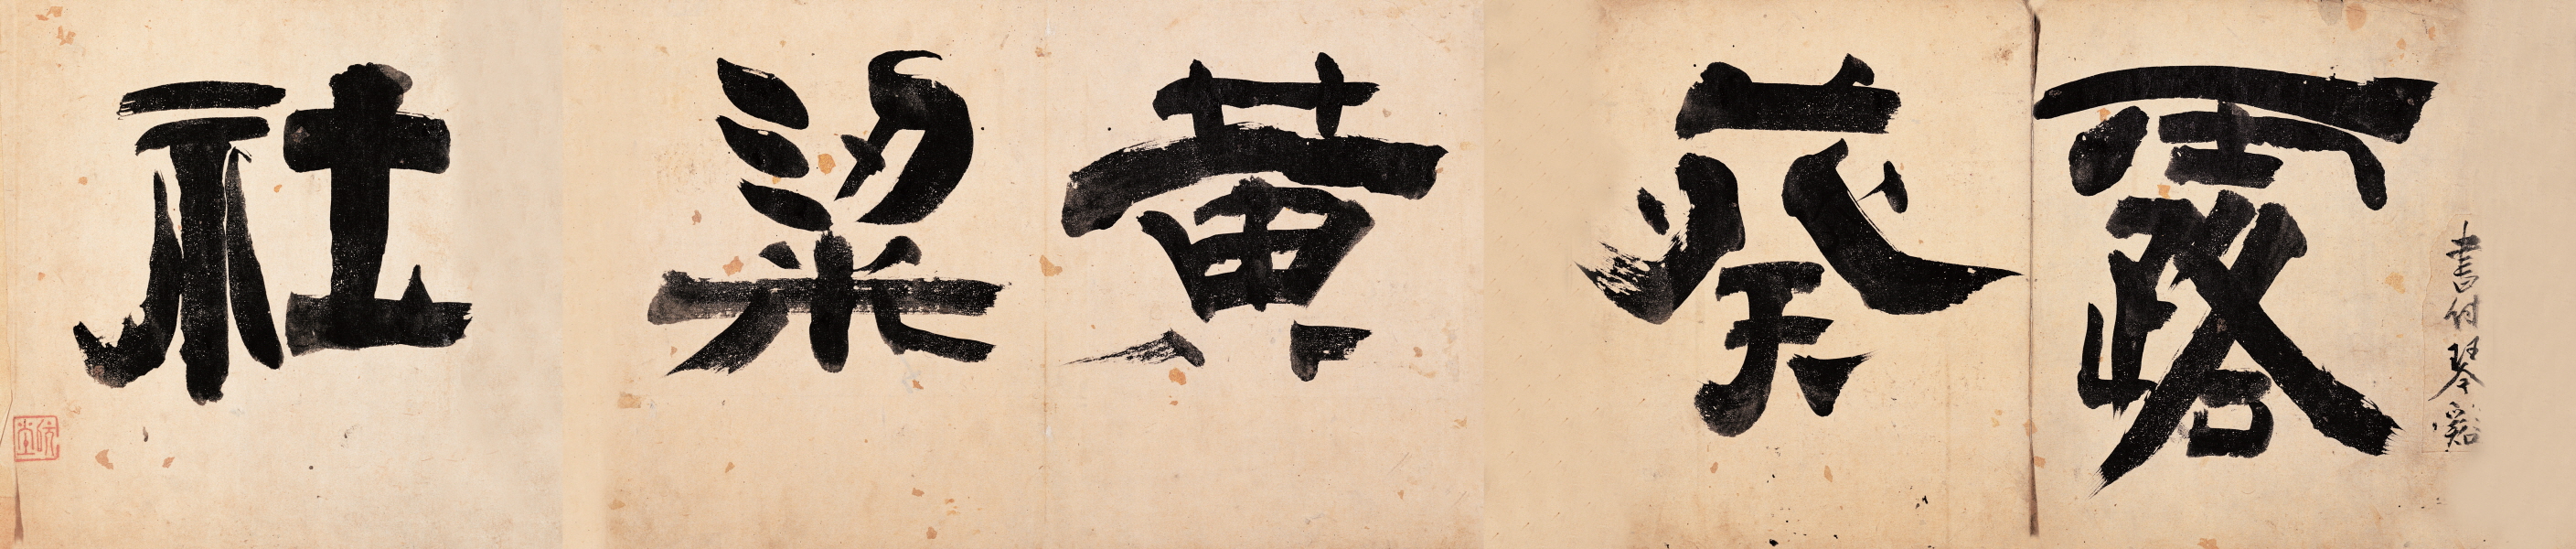 Chusa (秋史) Kim Jeong-hui (金正喜, 1786~1856), Rho-kyu-hwang-ryang-sa 露葵黃粱社, mid 19th century, ink on paper, 37.1x23.9cm ⓒHakgojae Gallery